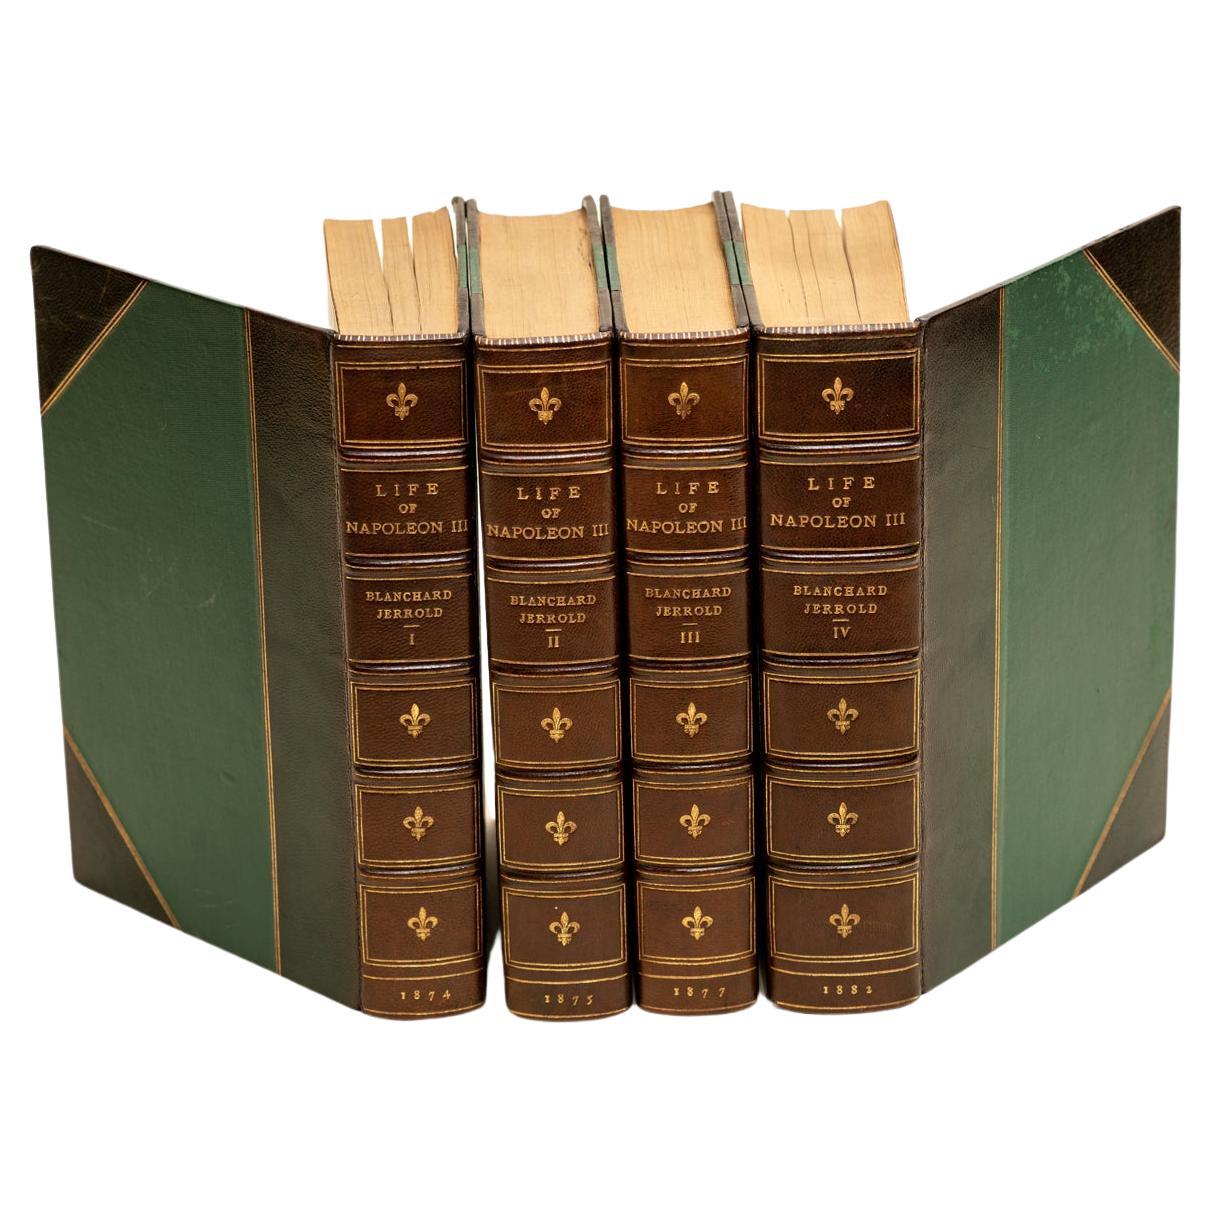  Volumes. Blanchard Jerrold, The Life of Napoleon III.